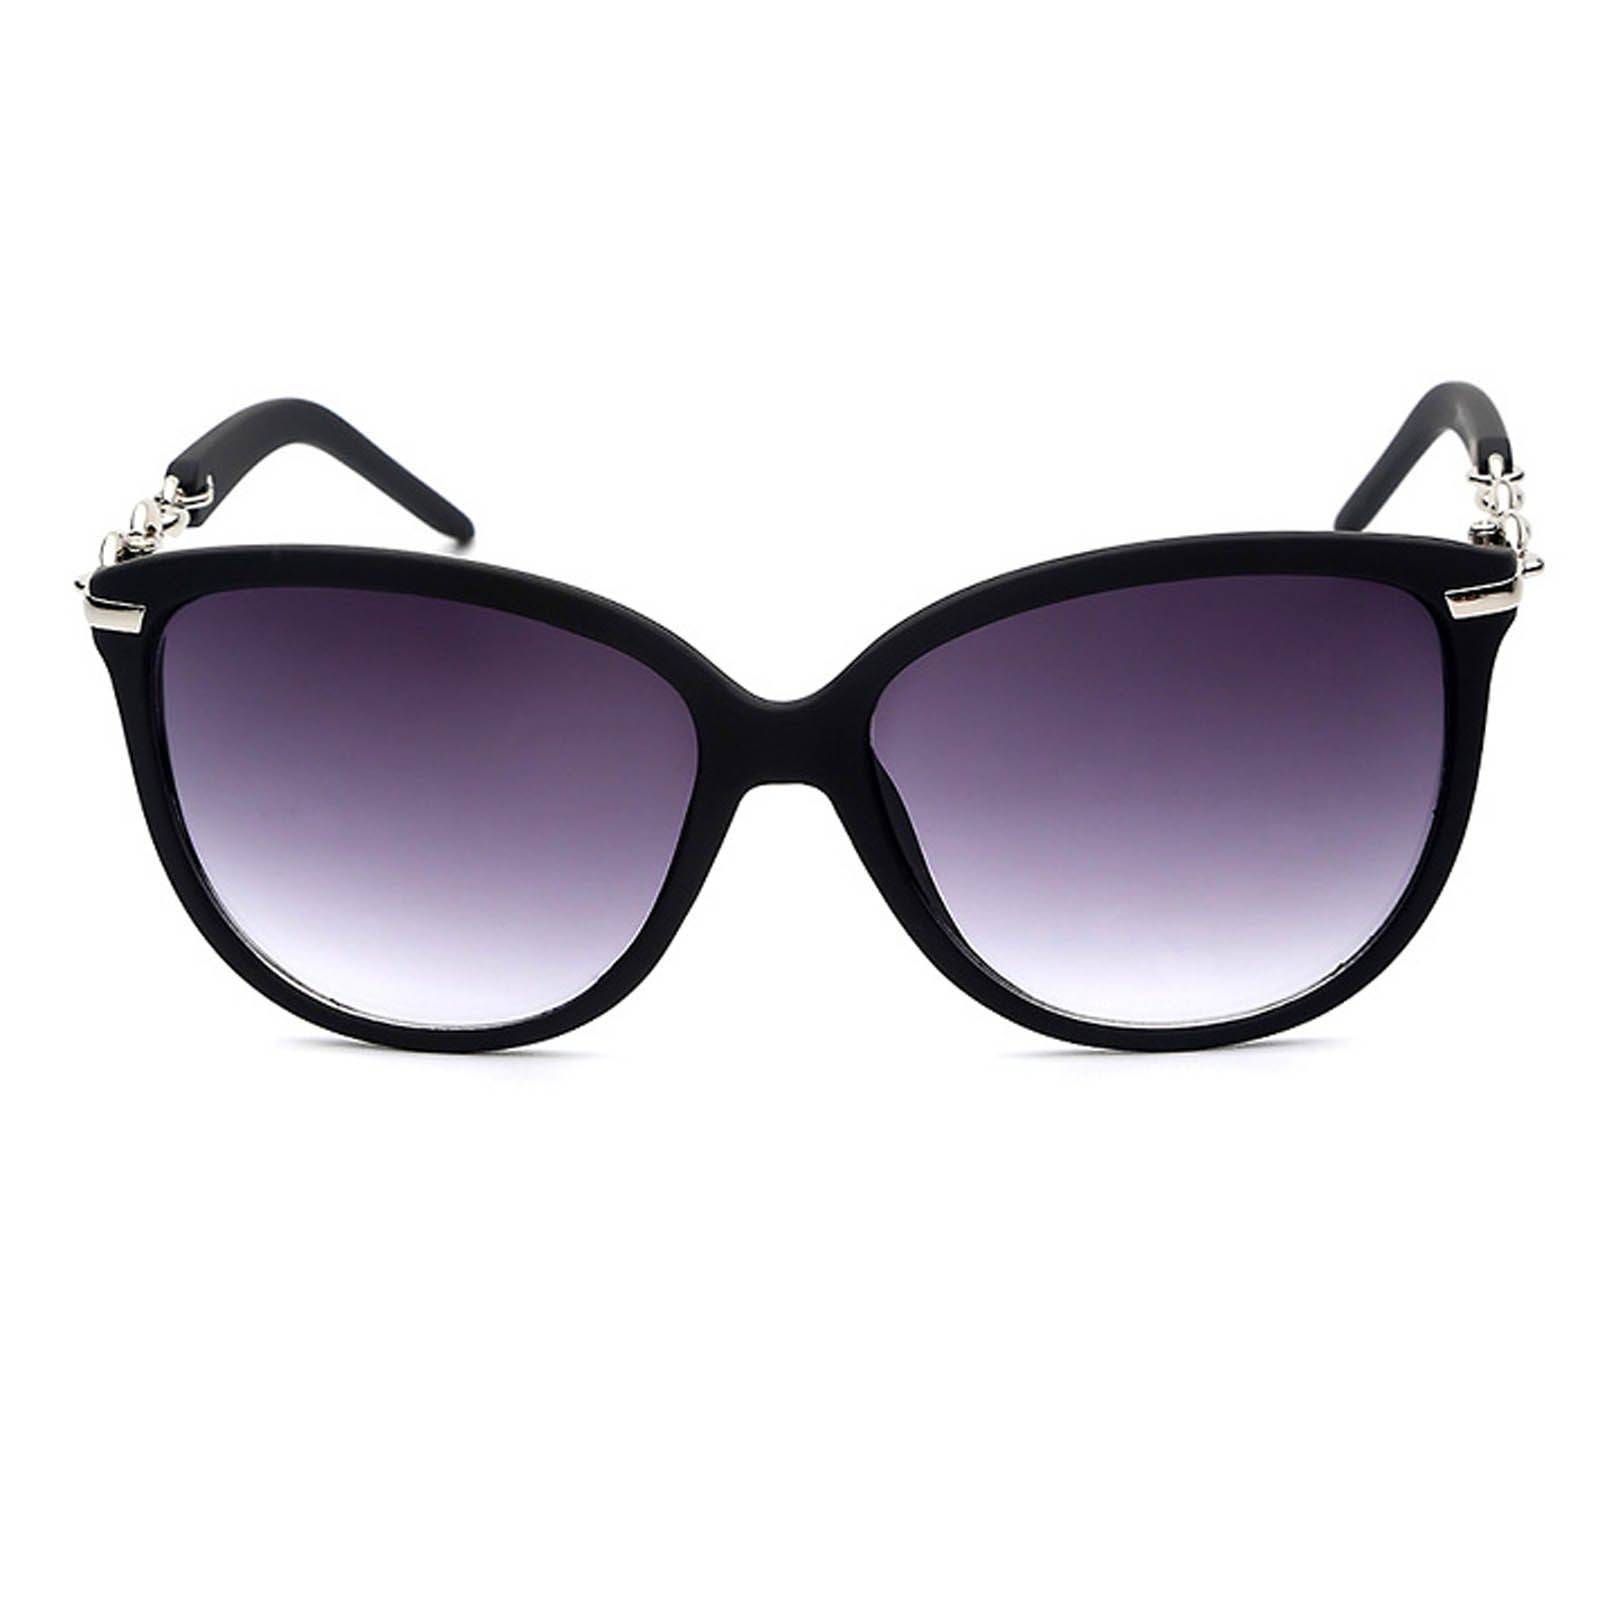 OWL ® 052 C2 Eyewear Sunglasses Women’s Men’s Plastic Black Frame Smoke ...